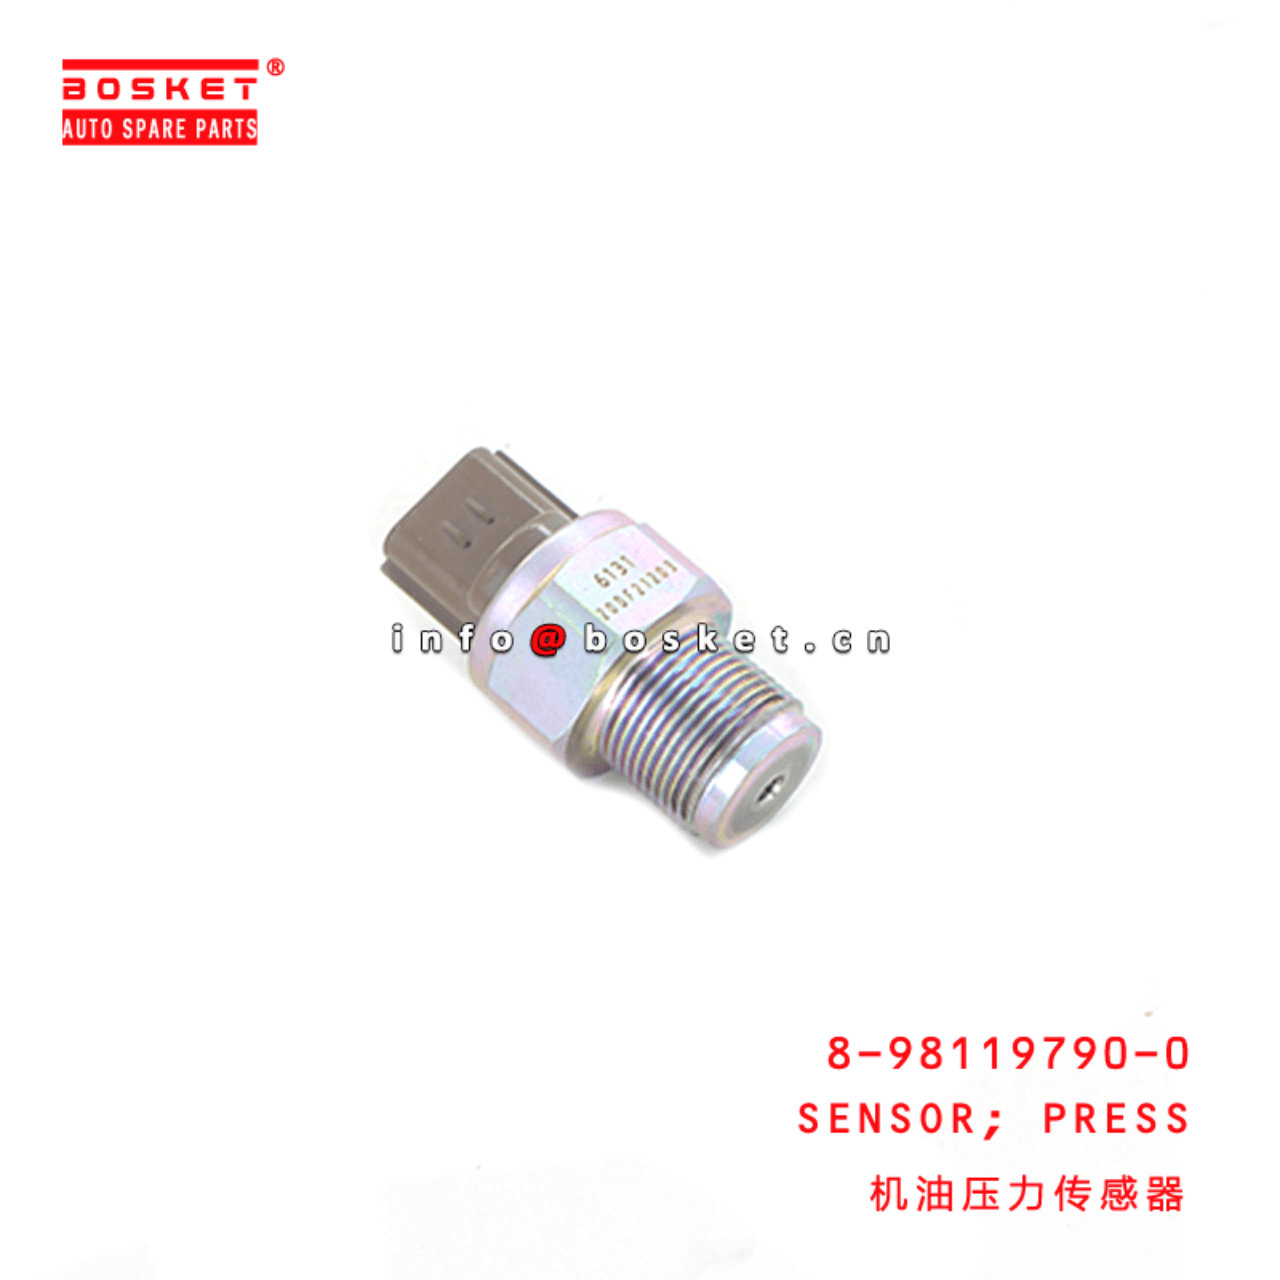 8-98119790-0 Press Sensor 8981197900 Suitable for ISUZU CXZ 4HK1